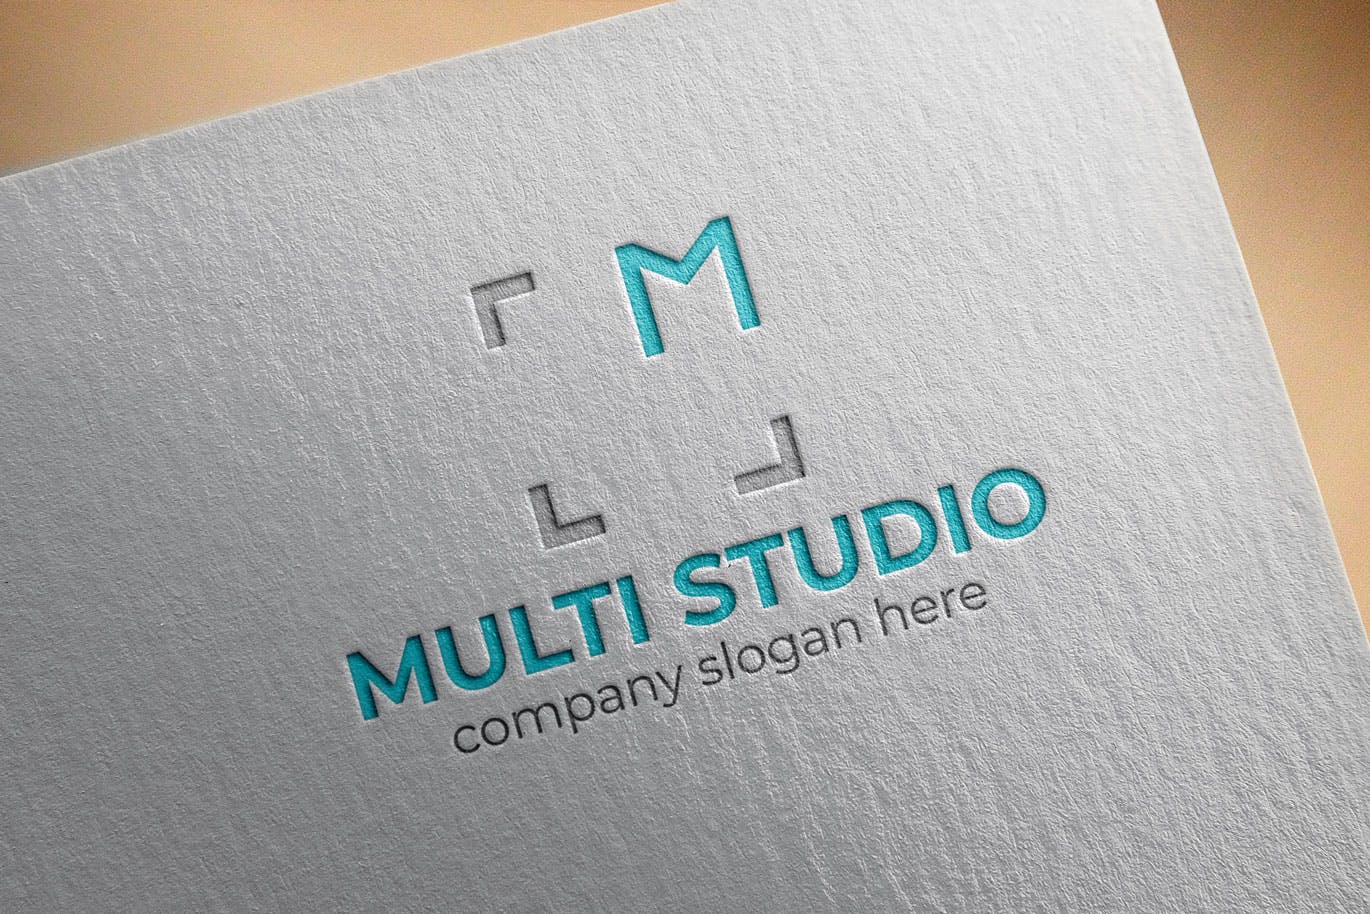 字母M创意图形企业品牌Logo设计16图库精选模板 Letter Based Business Logo Template插图(2)